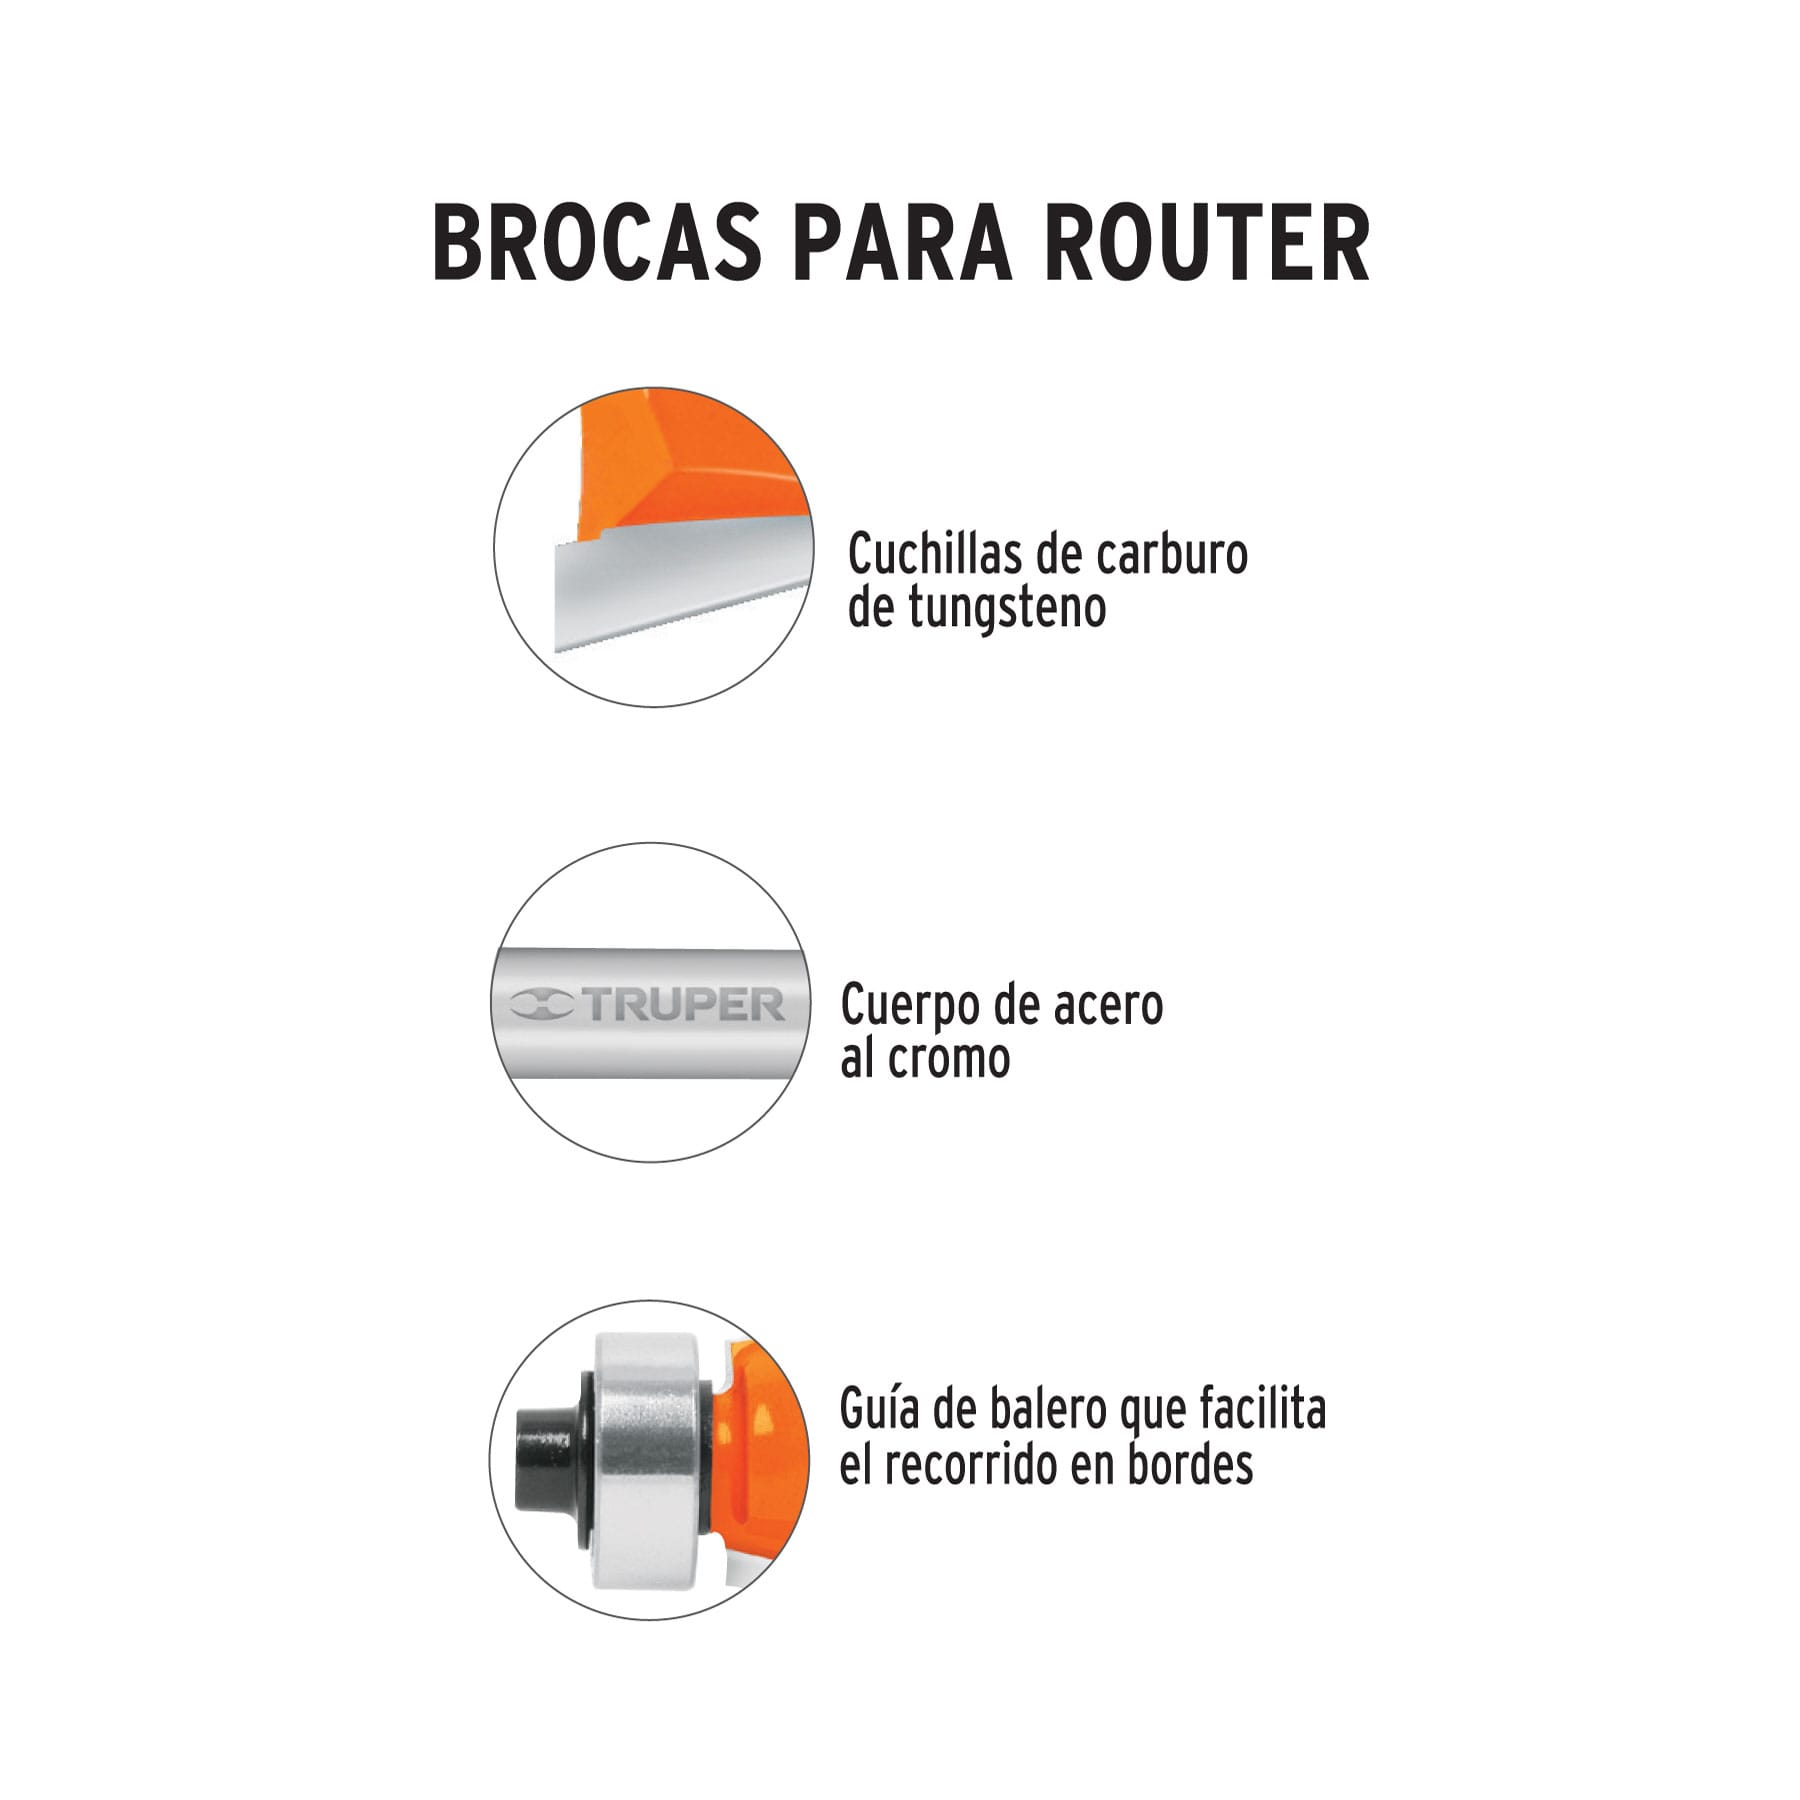 Broca Para Router, Doble Romana, 1-3/8", Con Balero, Truper